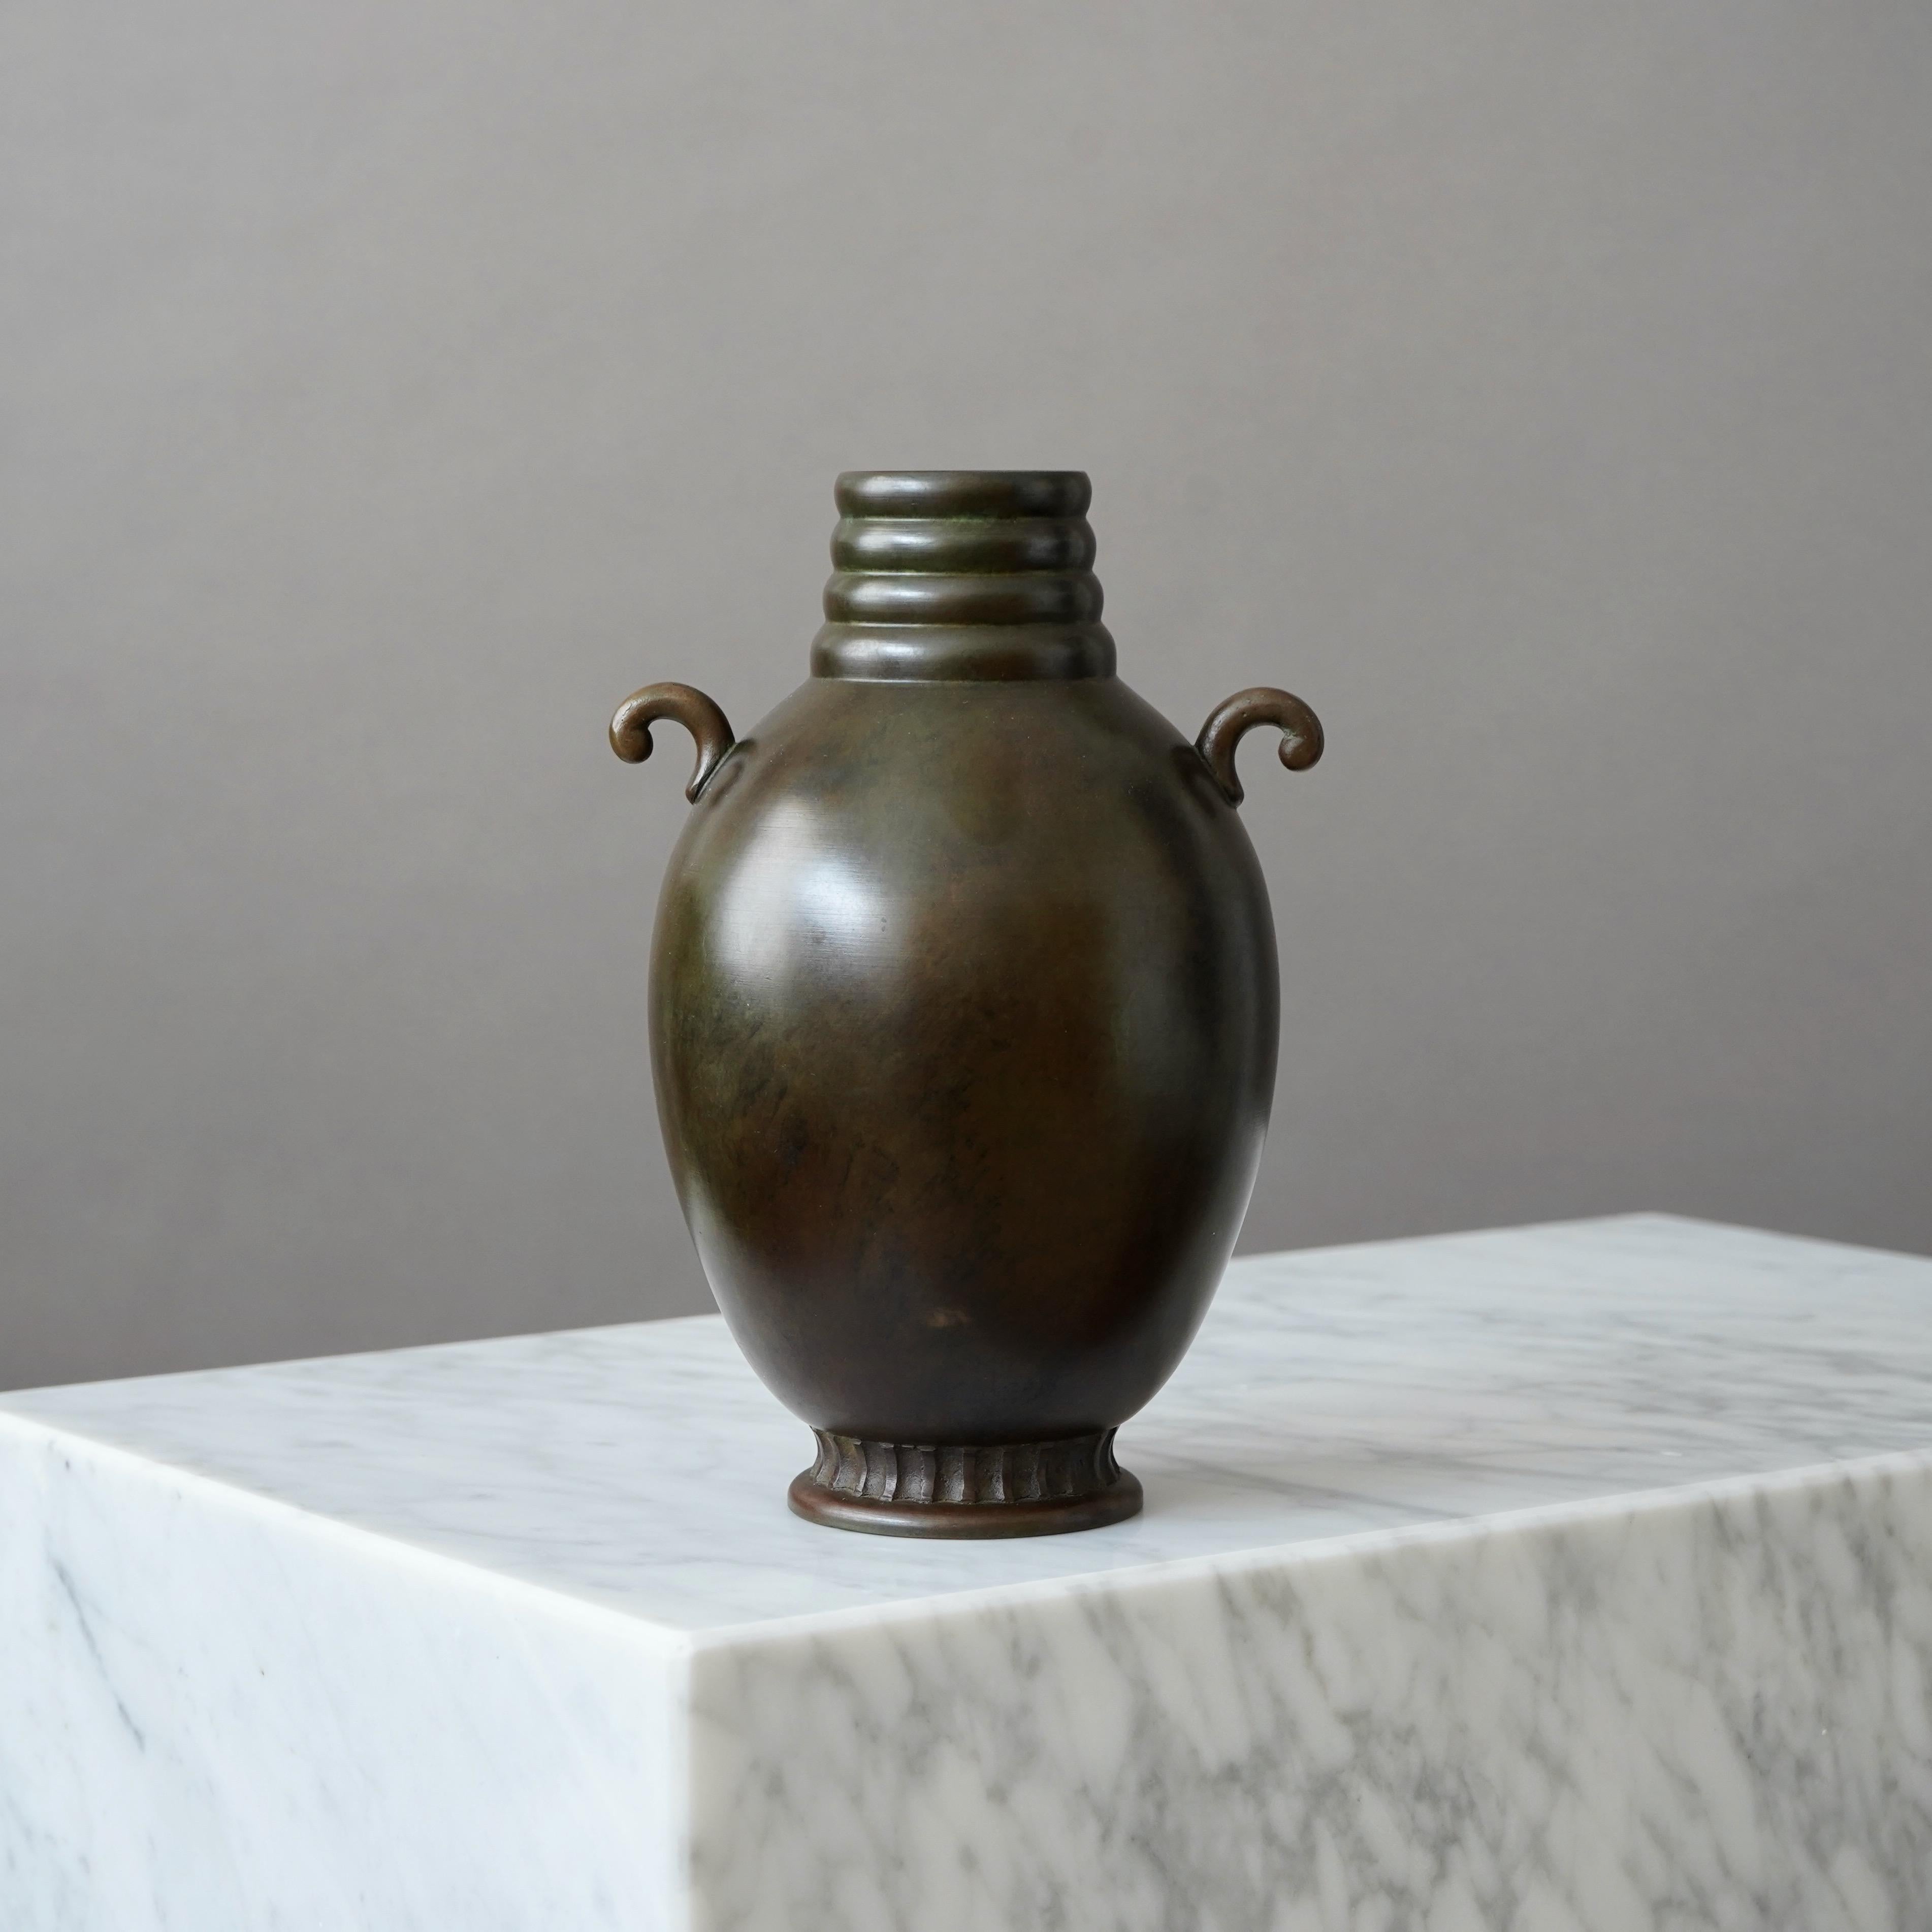 Scandinavian Modern Bronze Art Deco Vase by GAB Guldsmedsaktiebolaget, Sweden, 1930s For Sale